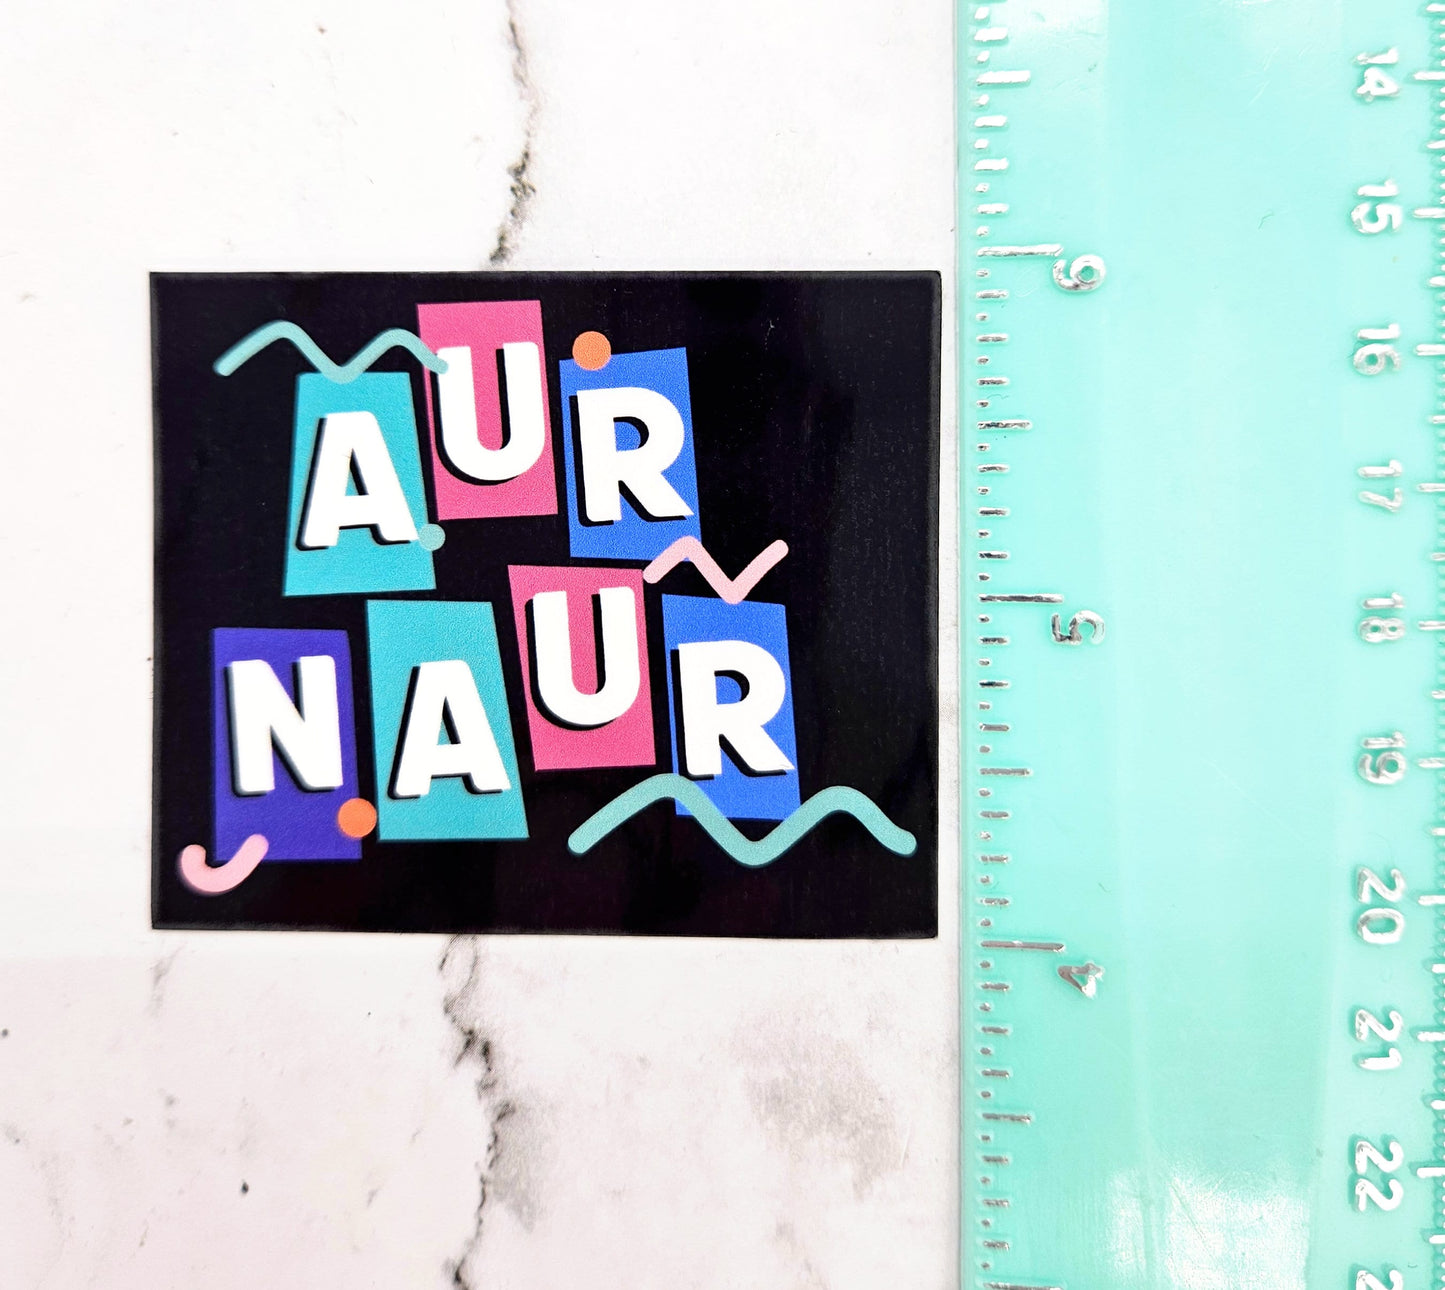 Aur Naur 90s Sticker - 1990s Millennial Vibe, Sarcastic Saying, Memphis, Old School, Retro